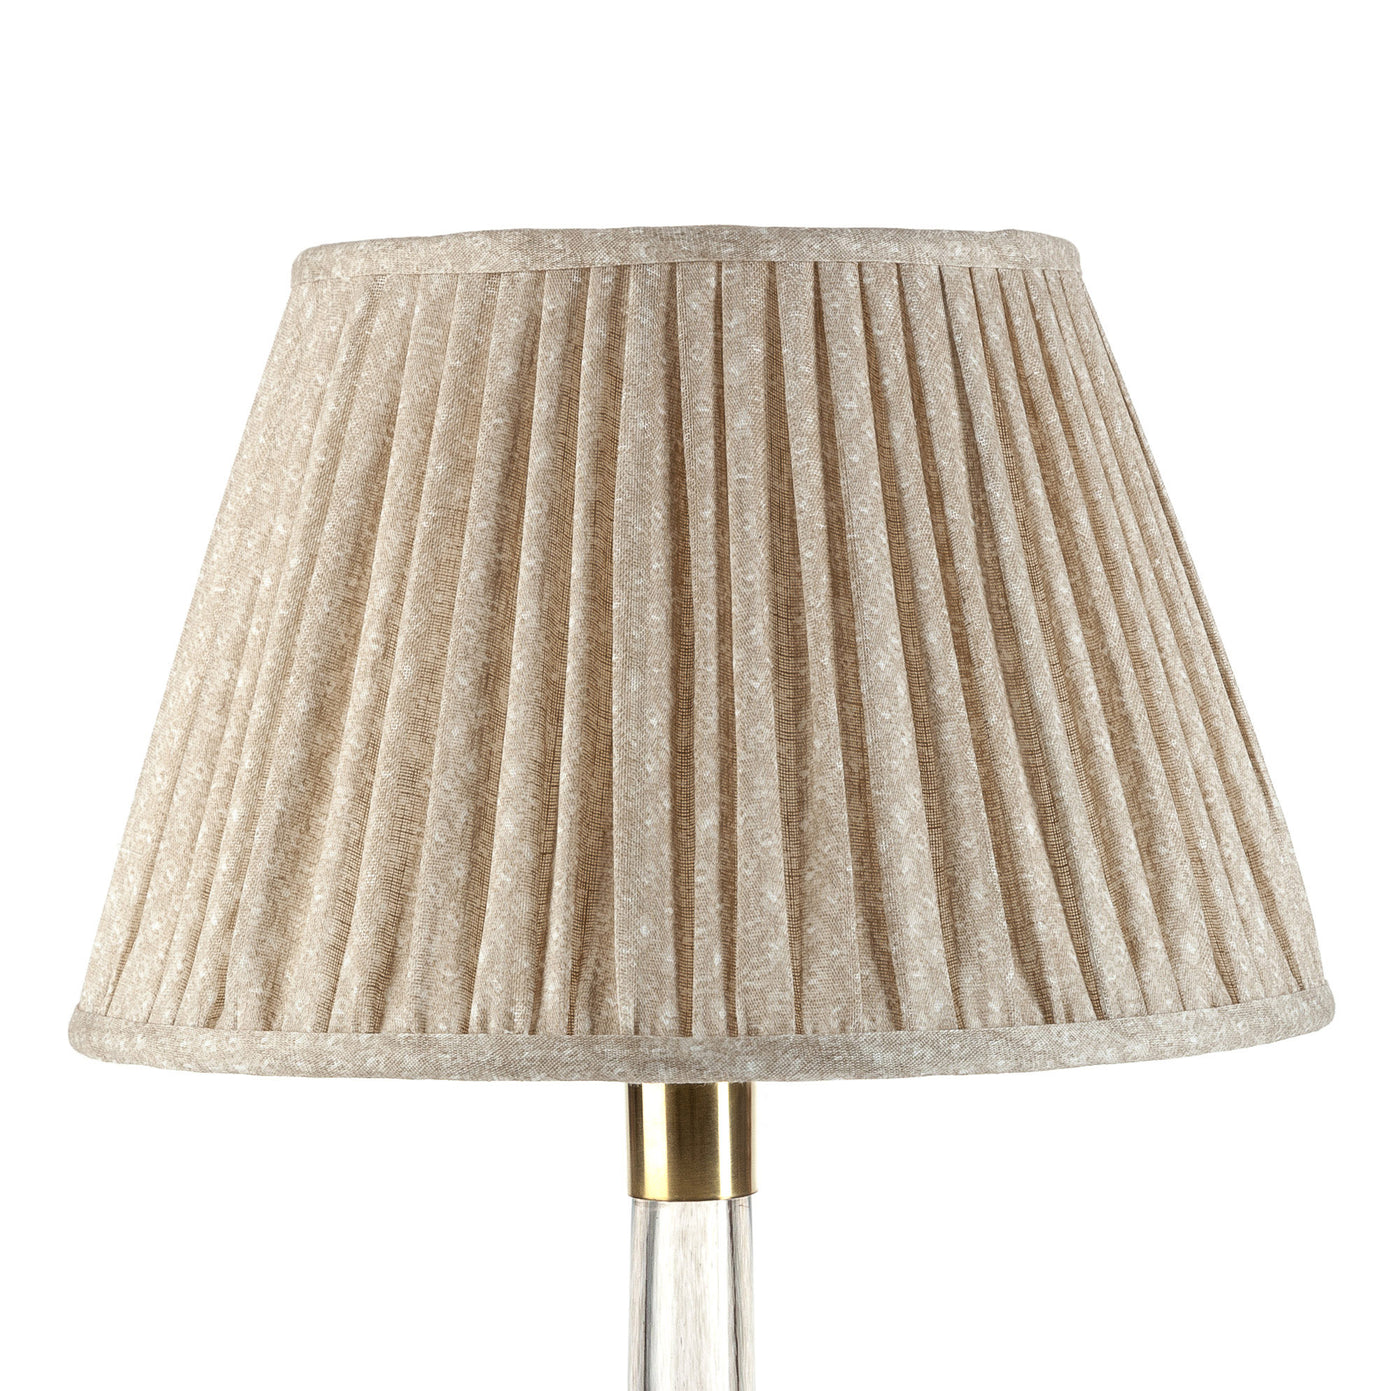 Fermoie Lampshade - Figured Linen in Ecru  | Newport Lamp And Shade | Located in Newport, RI